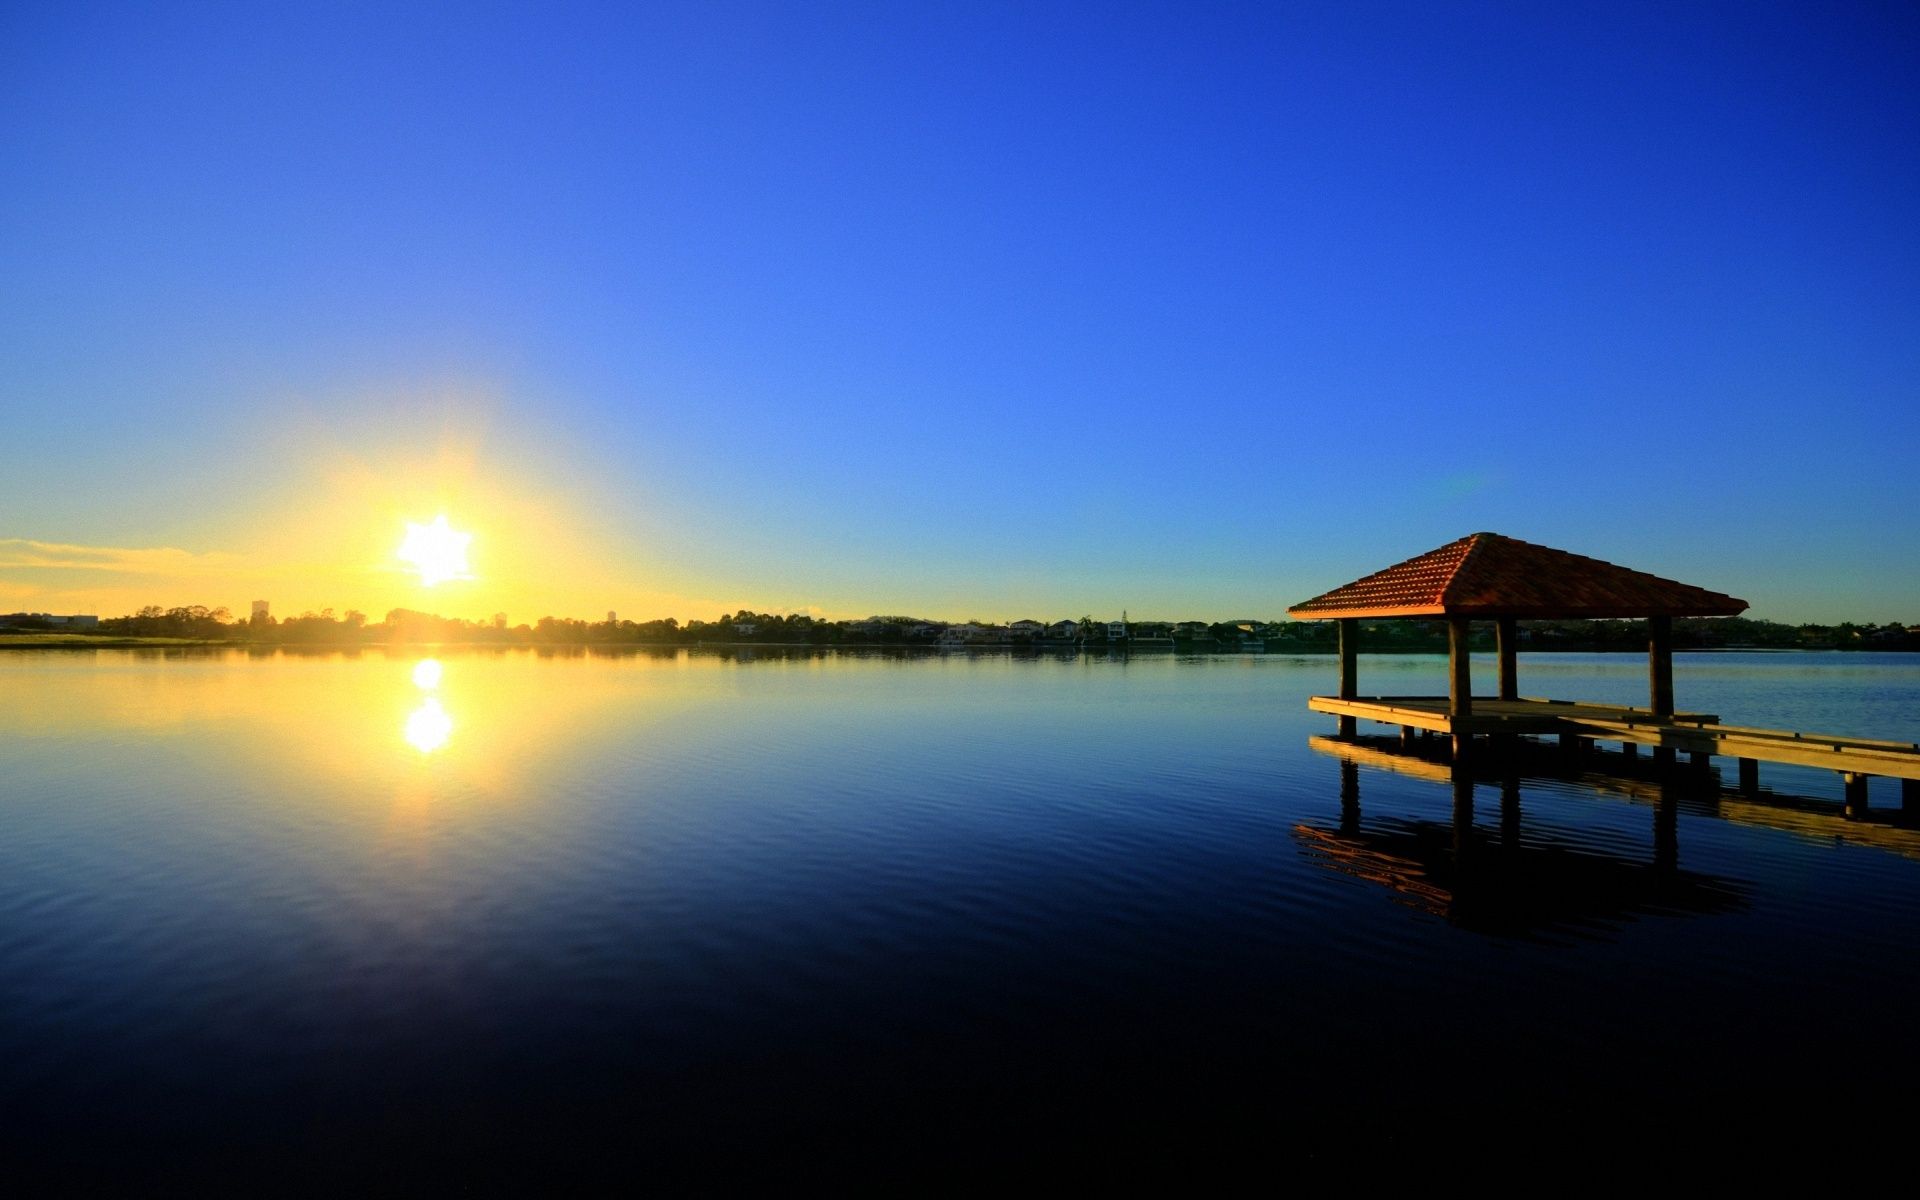 Sunrise peacefully over a lake. Sunrise wallpaper